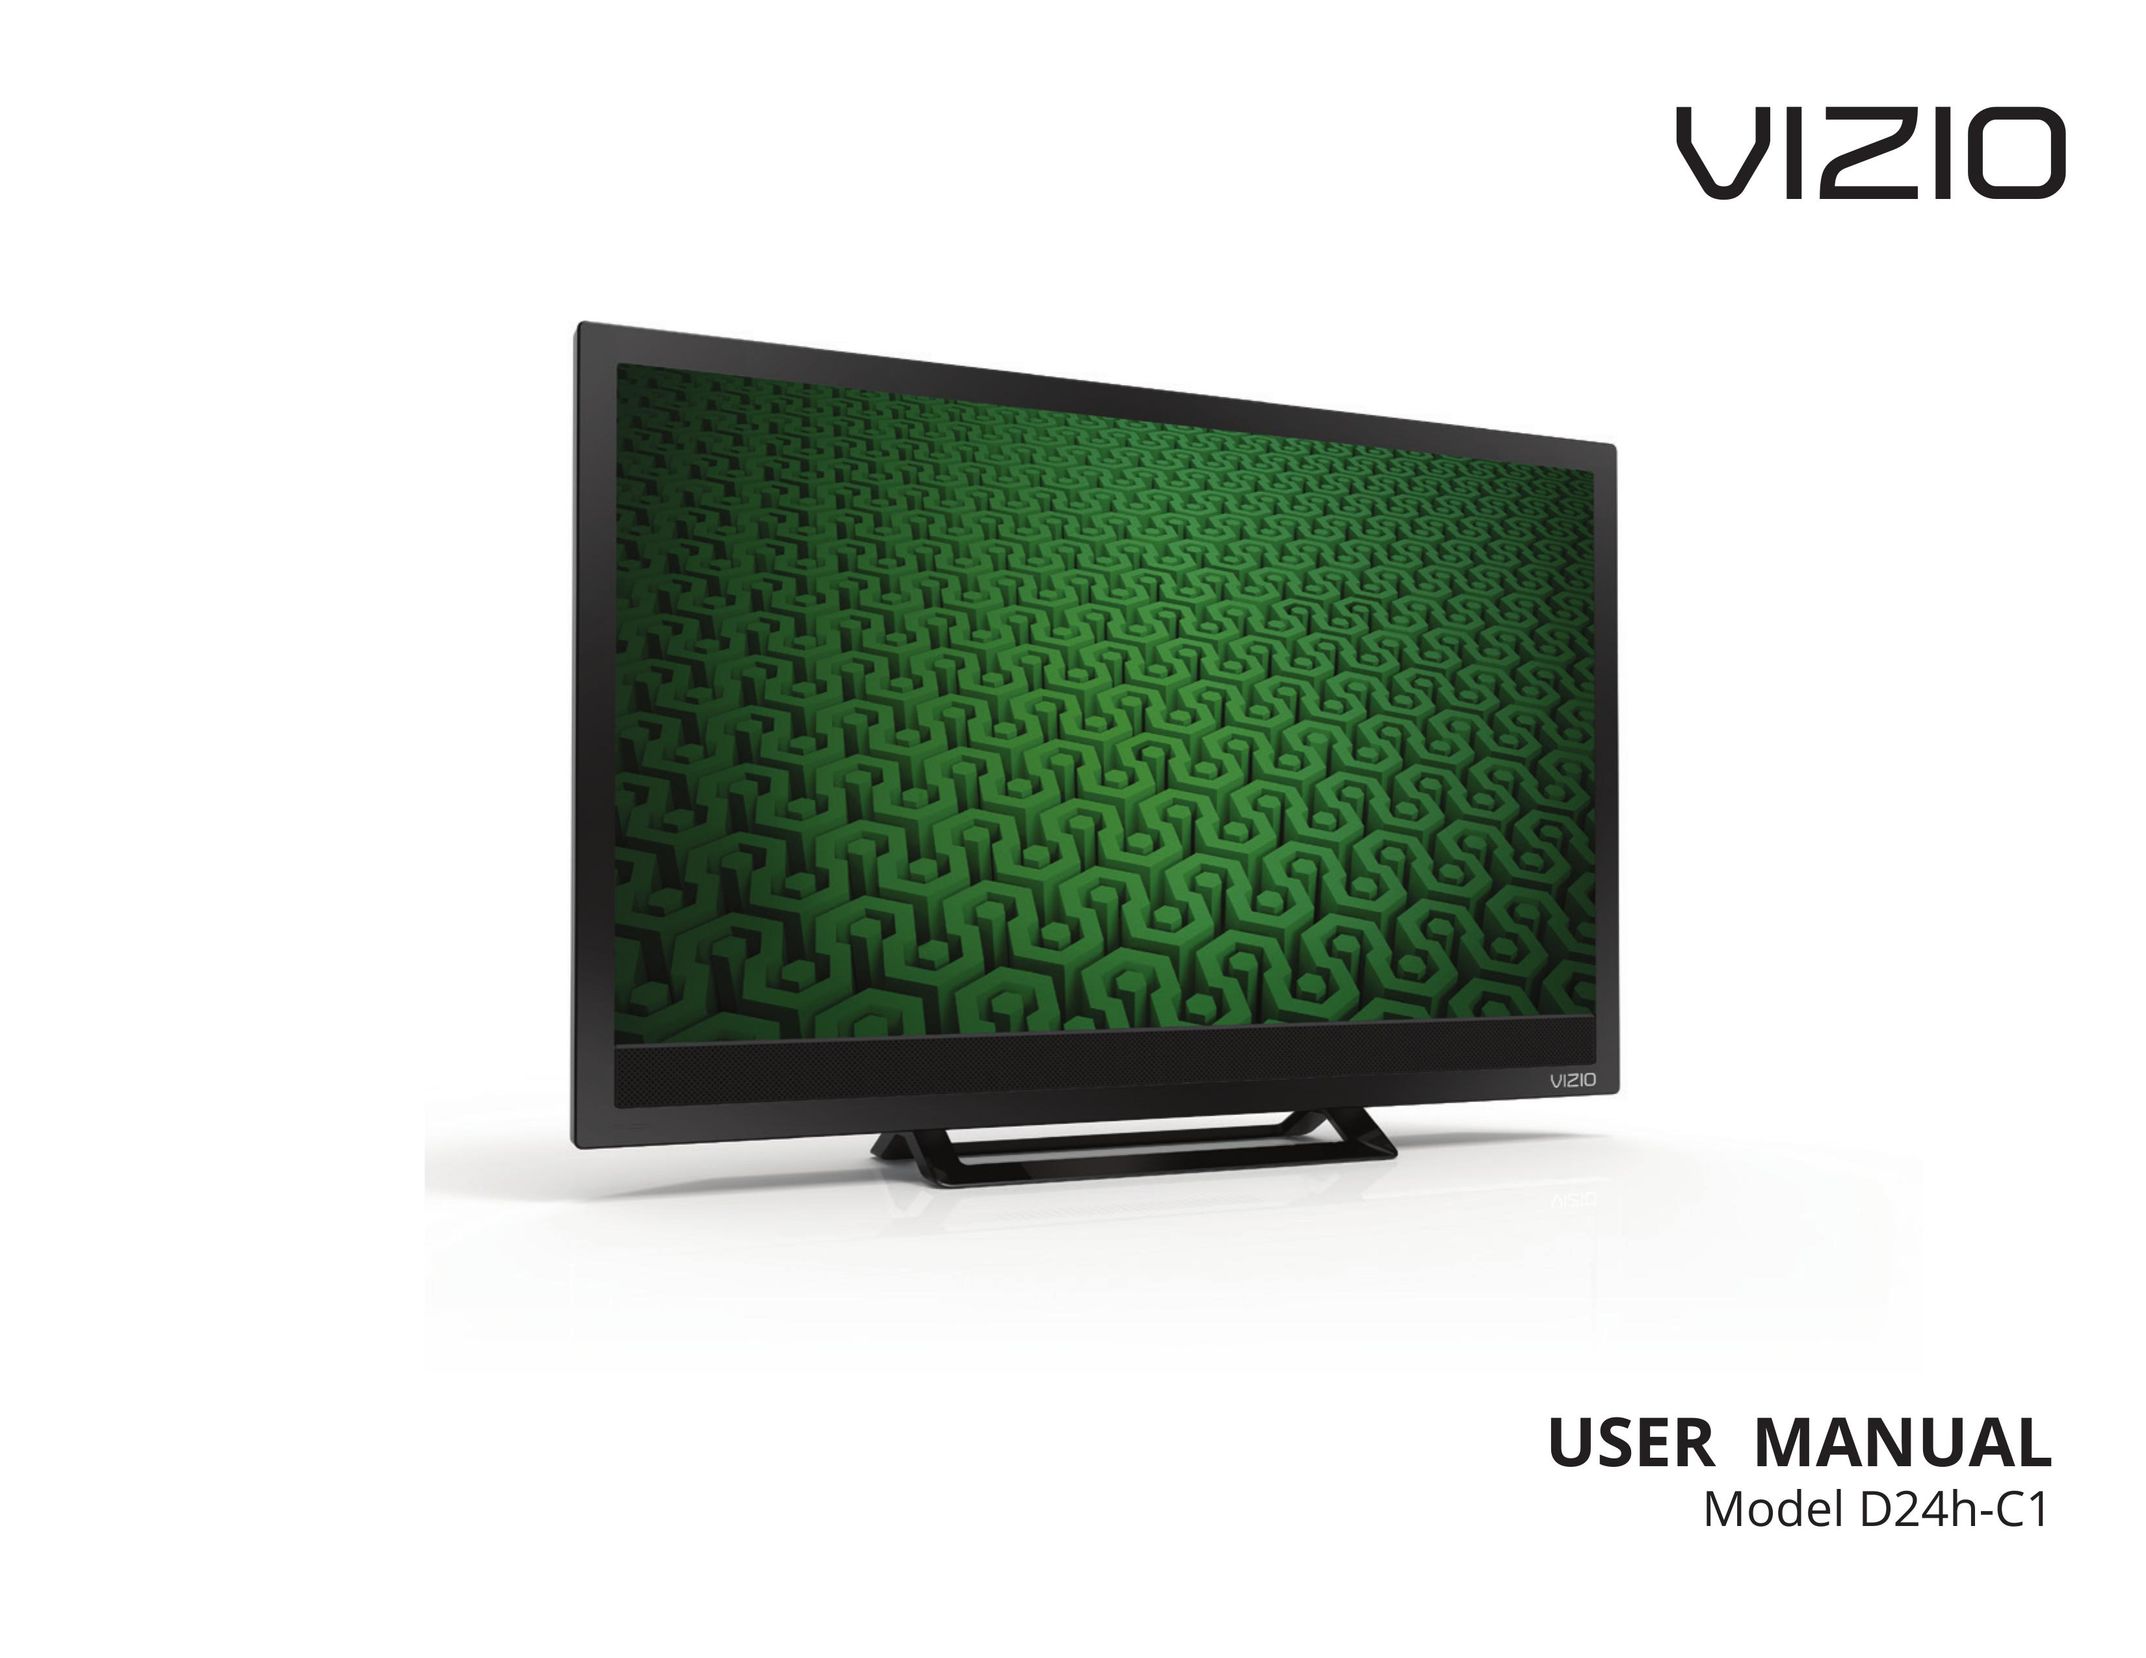 Vizio D24h-C1 Flat Panel Television User Manual